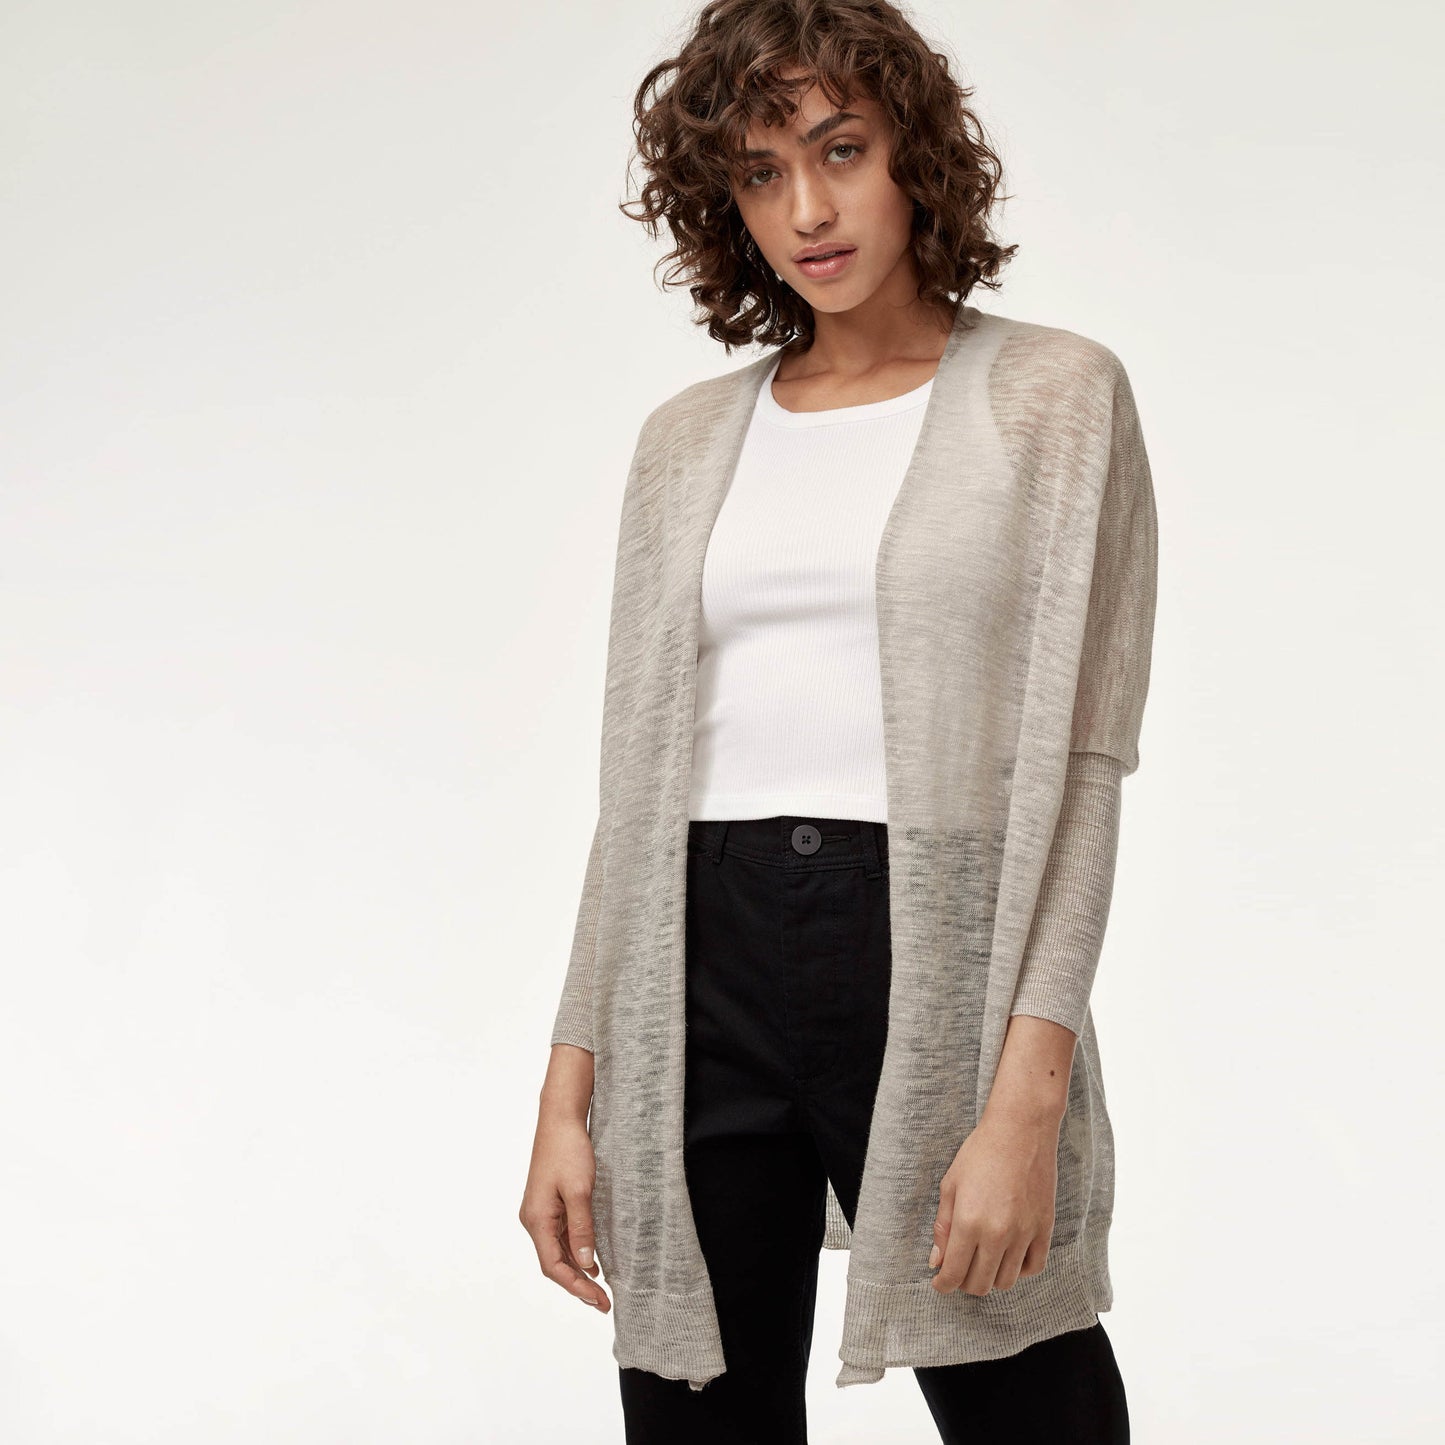 Community Gillams Sweater - size Large